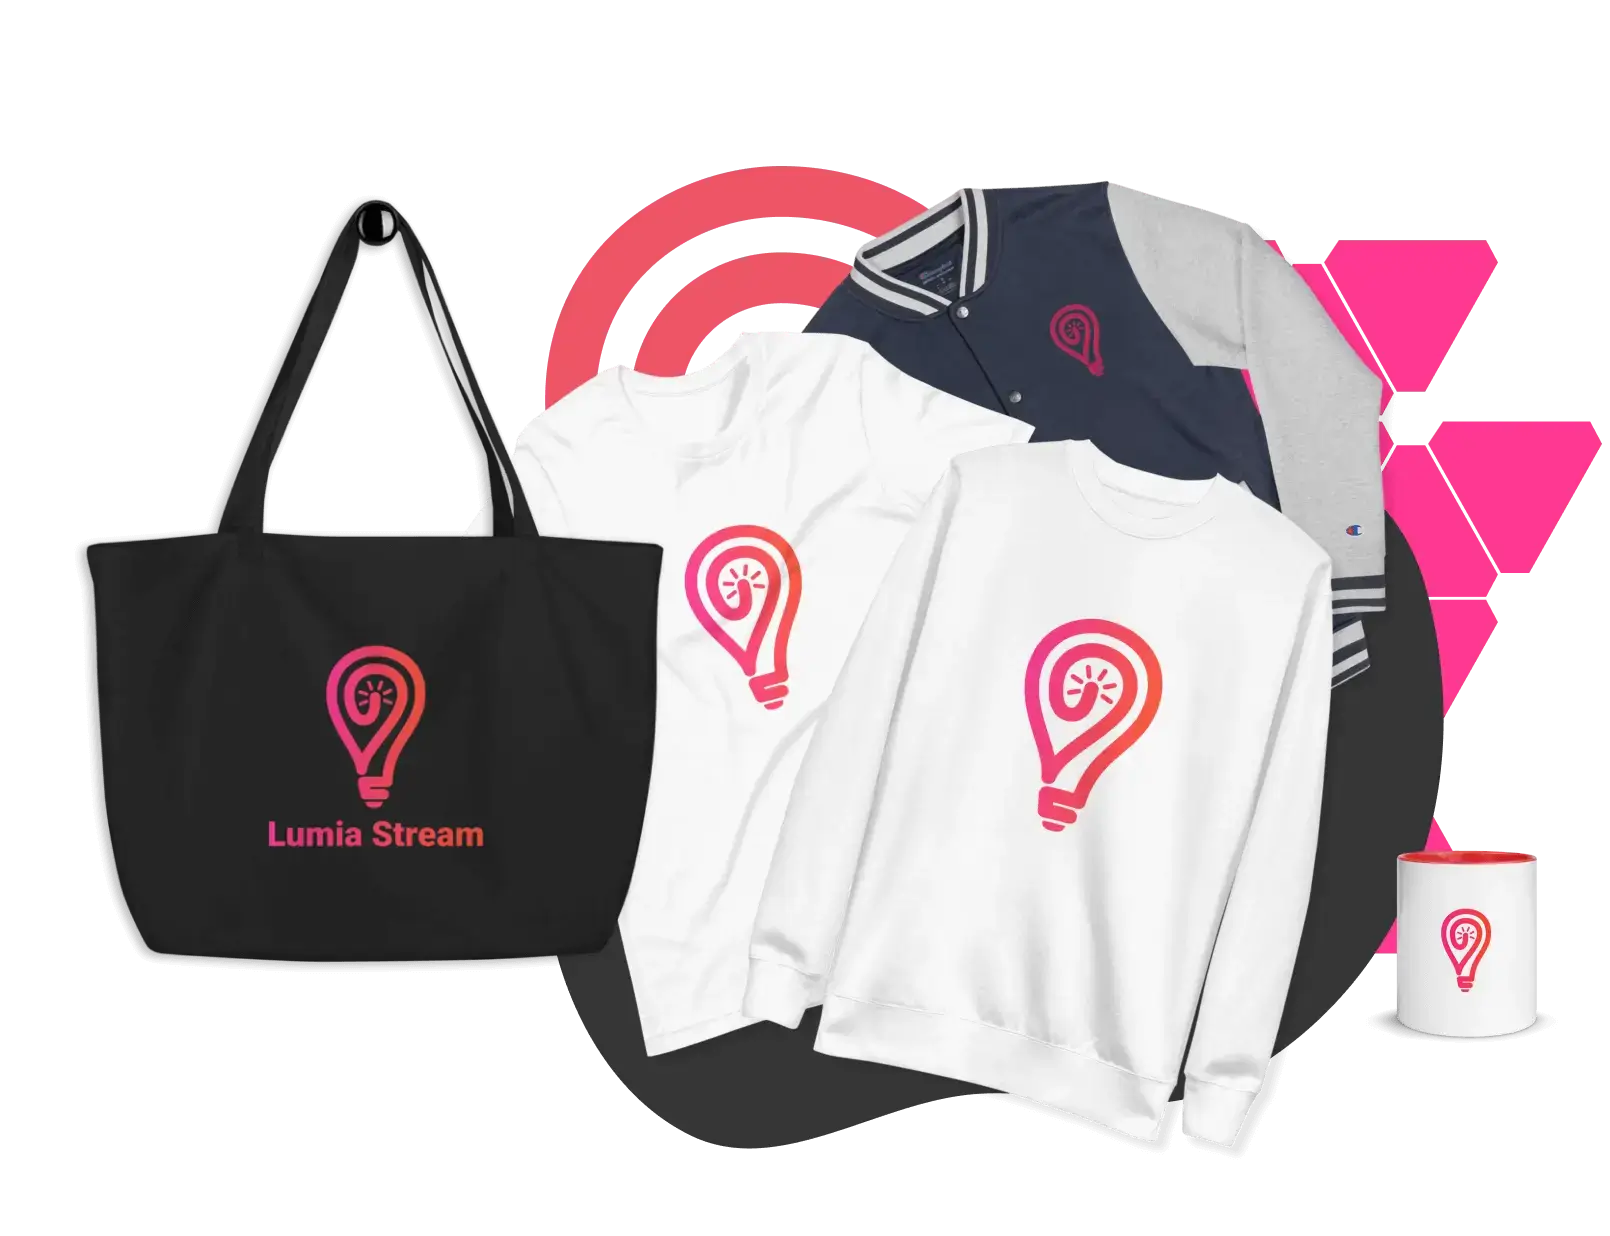 Lumia Stream clothing